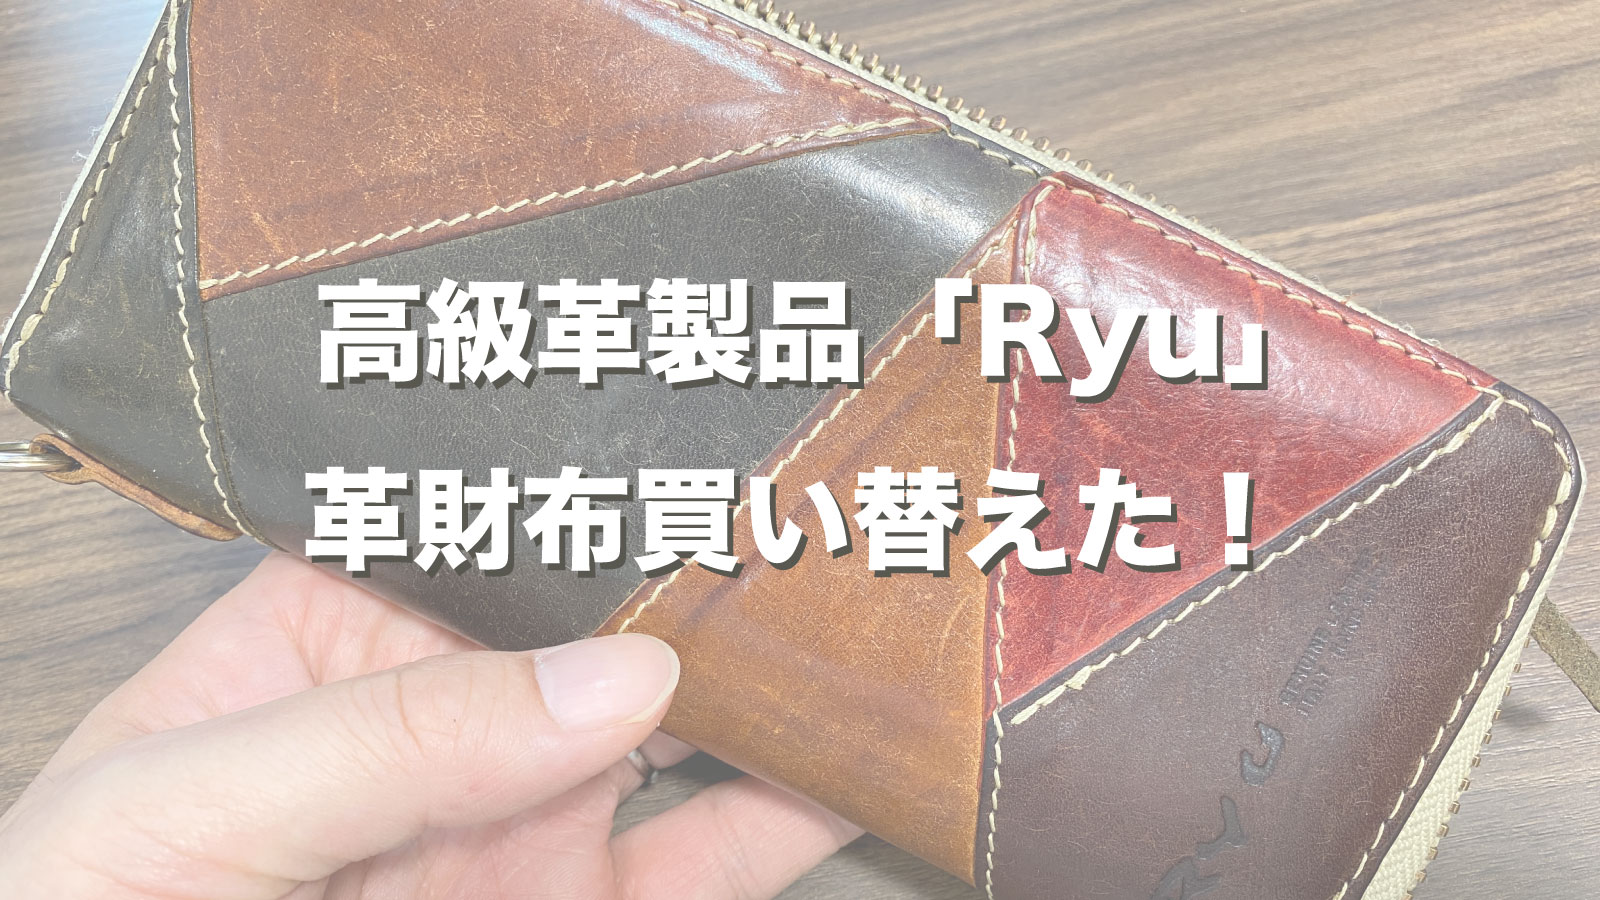 Ryu 財布長財布 - www.kairosinsurancegroup.com